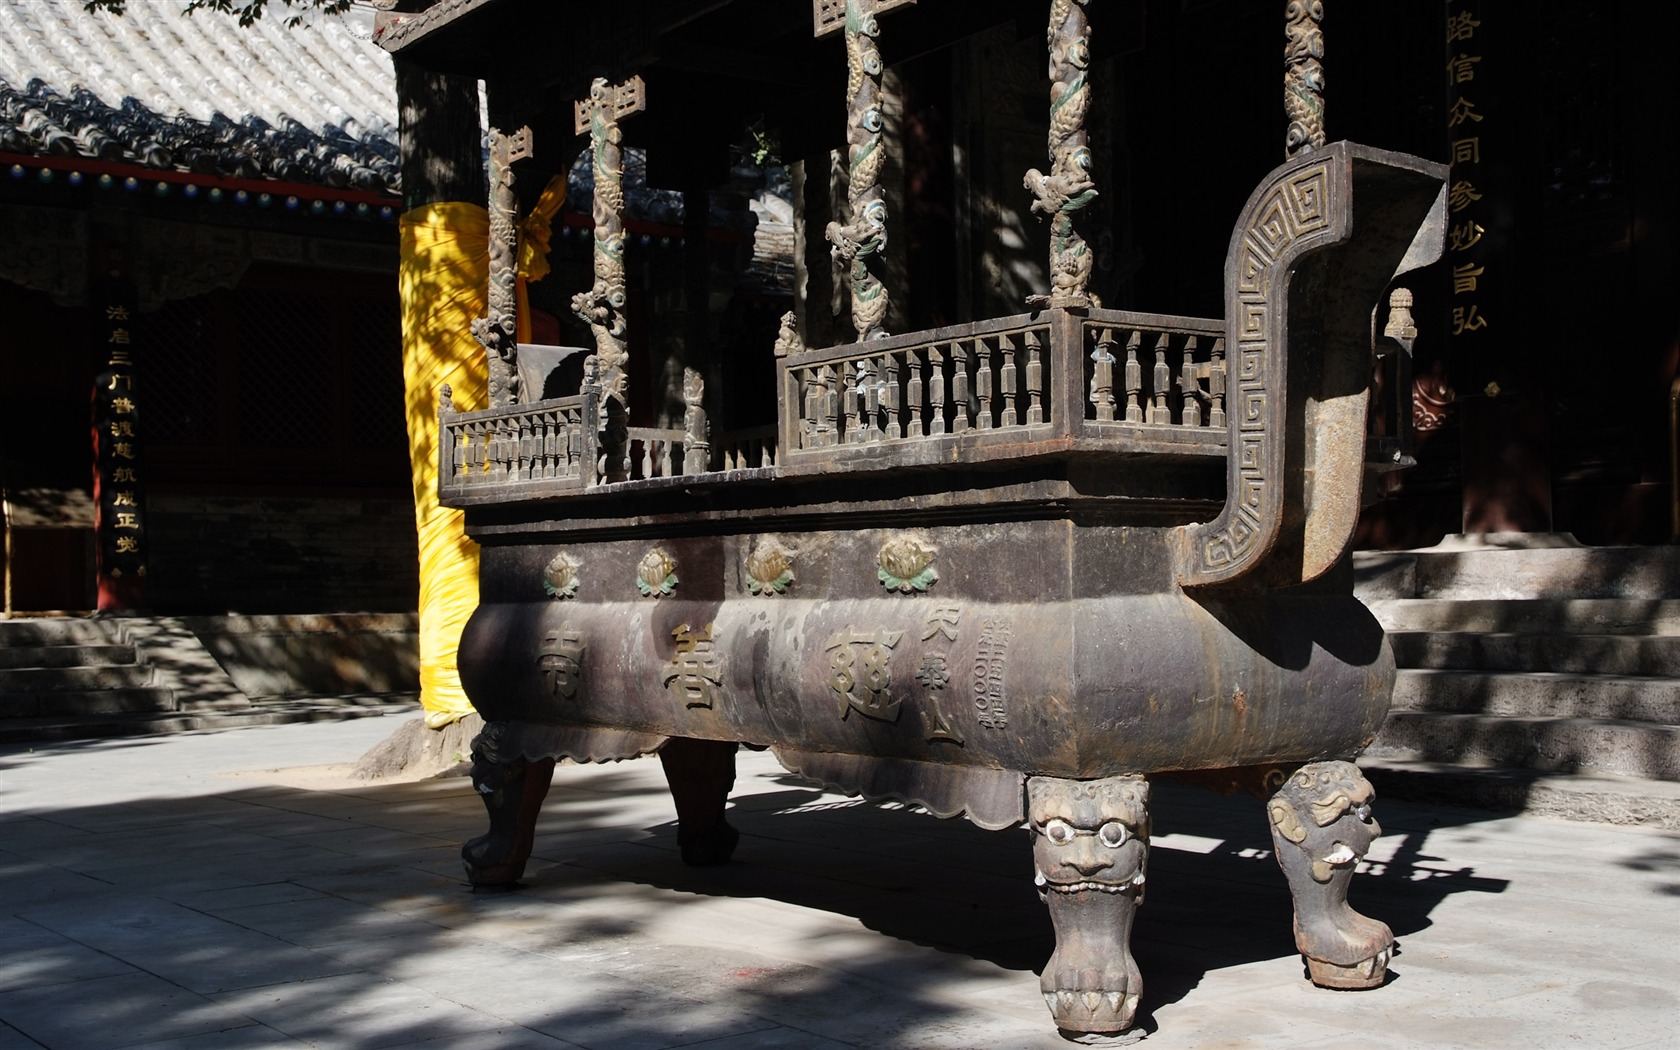 Charity Temple Jingxi monuments (rebar works) #19 - 1680x1050